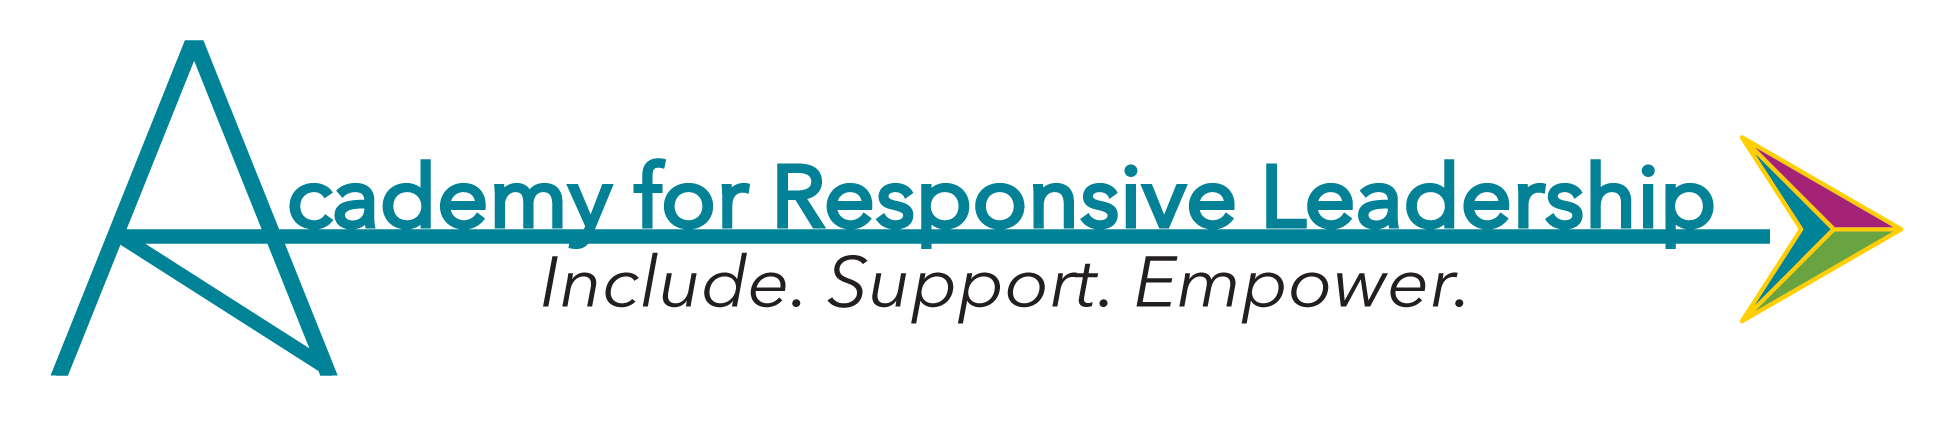 Academy for Responsive Leadership logo